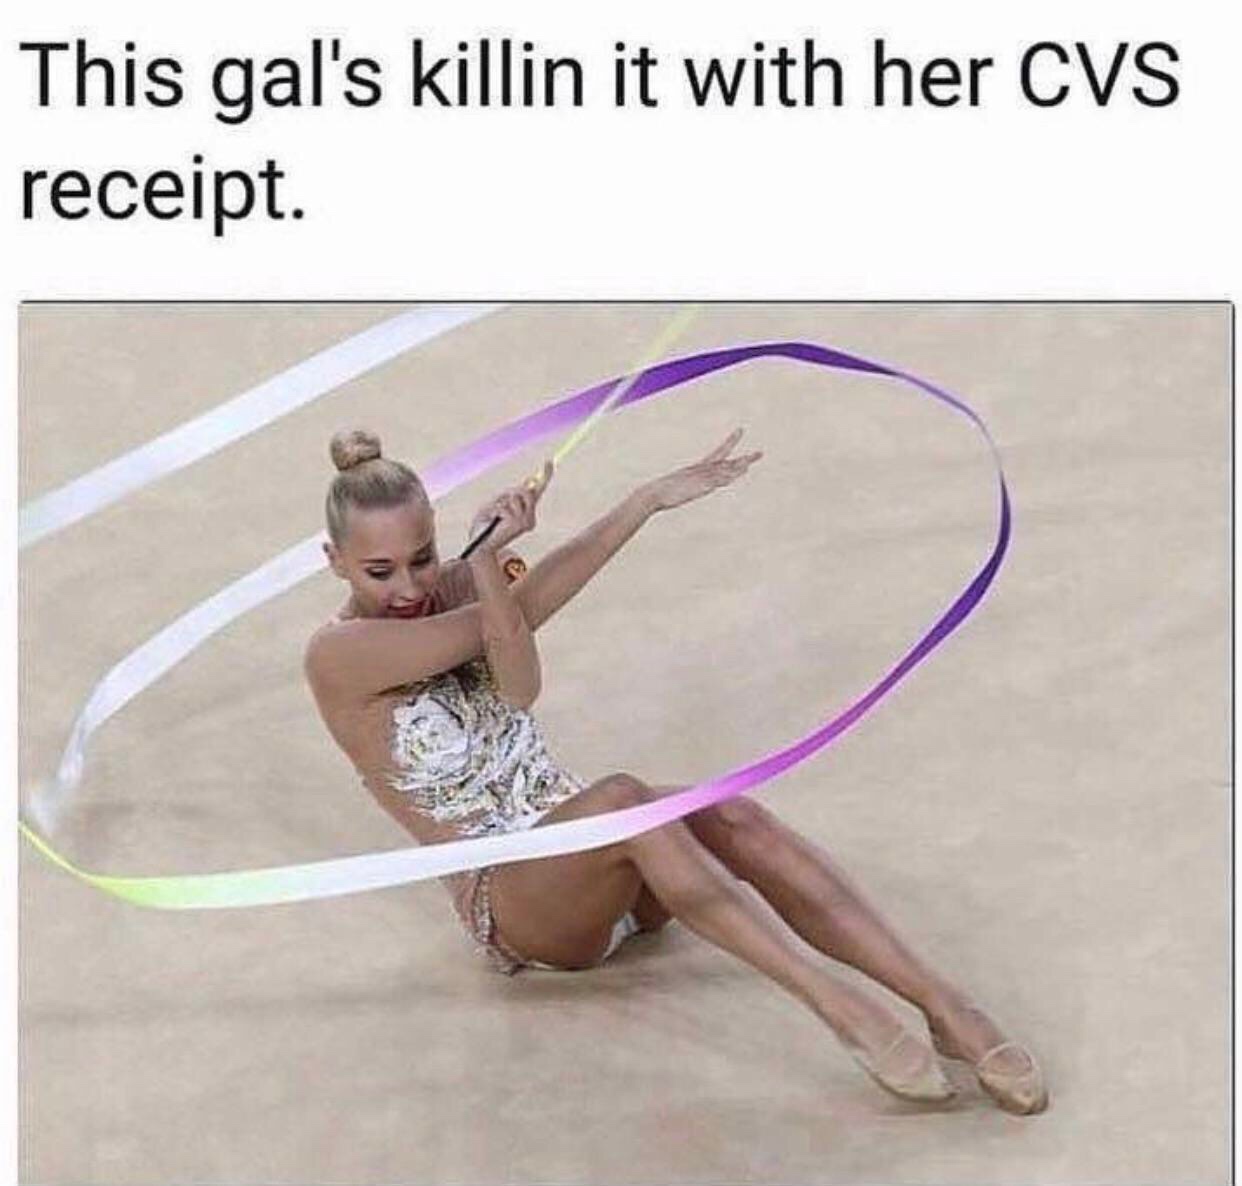 killing it with cvs receipt - This gal's killin it with her Cvs receipt.